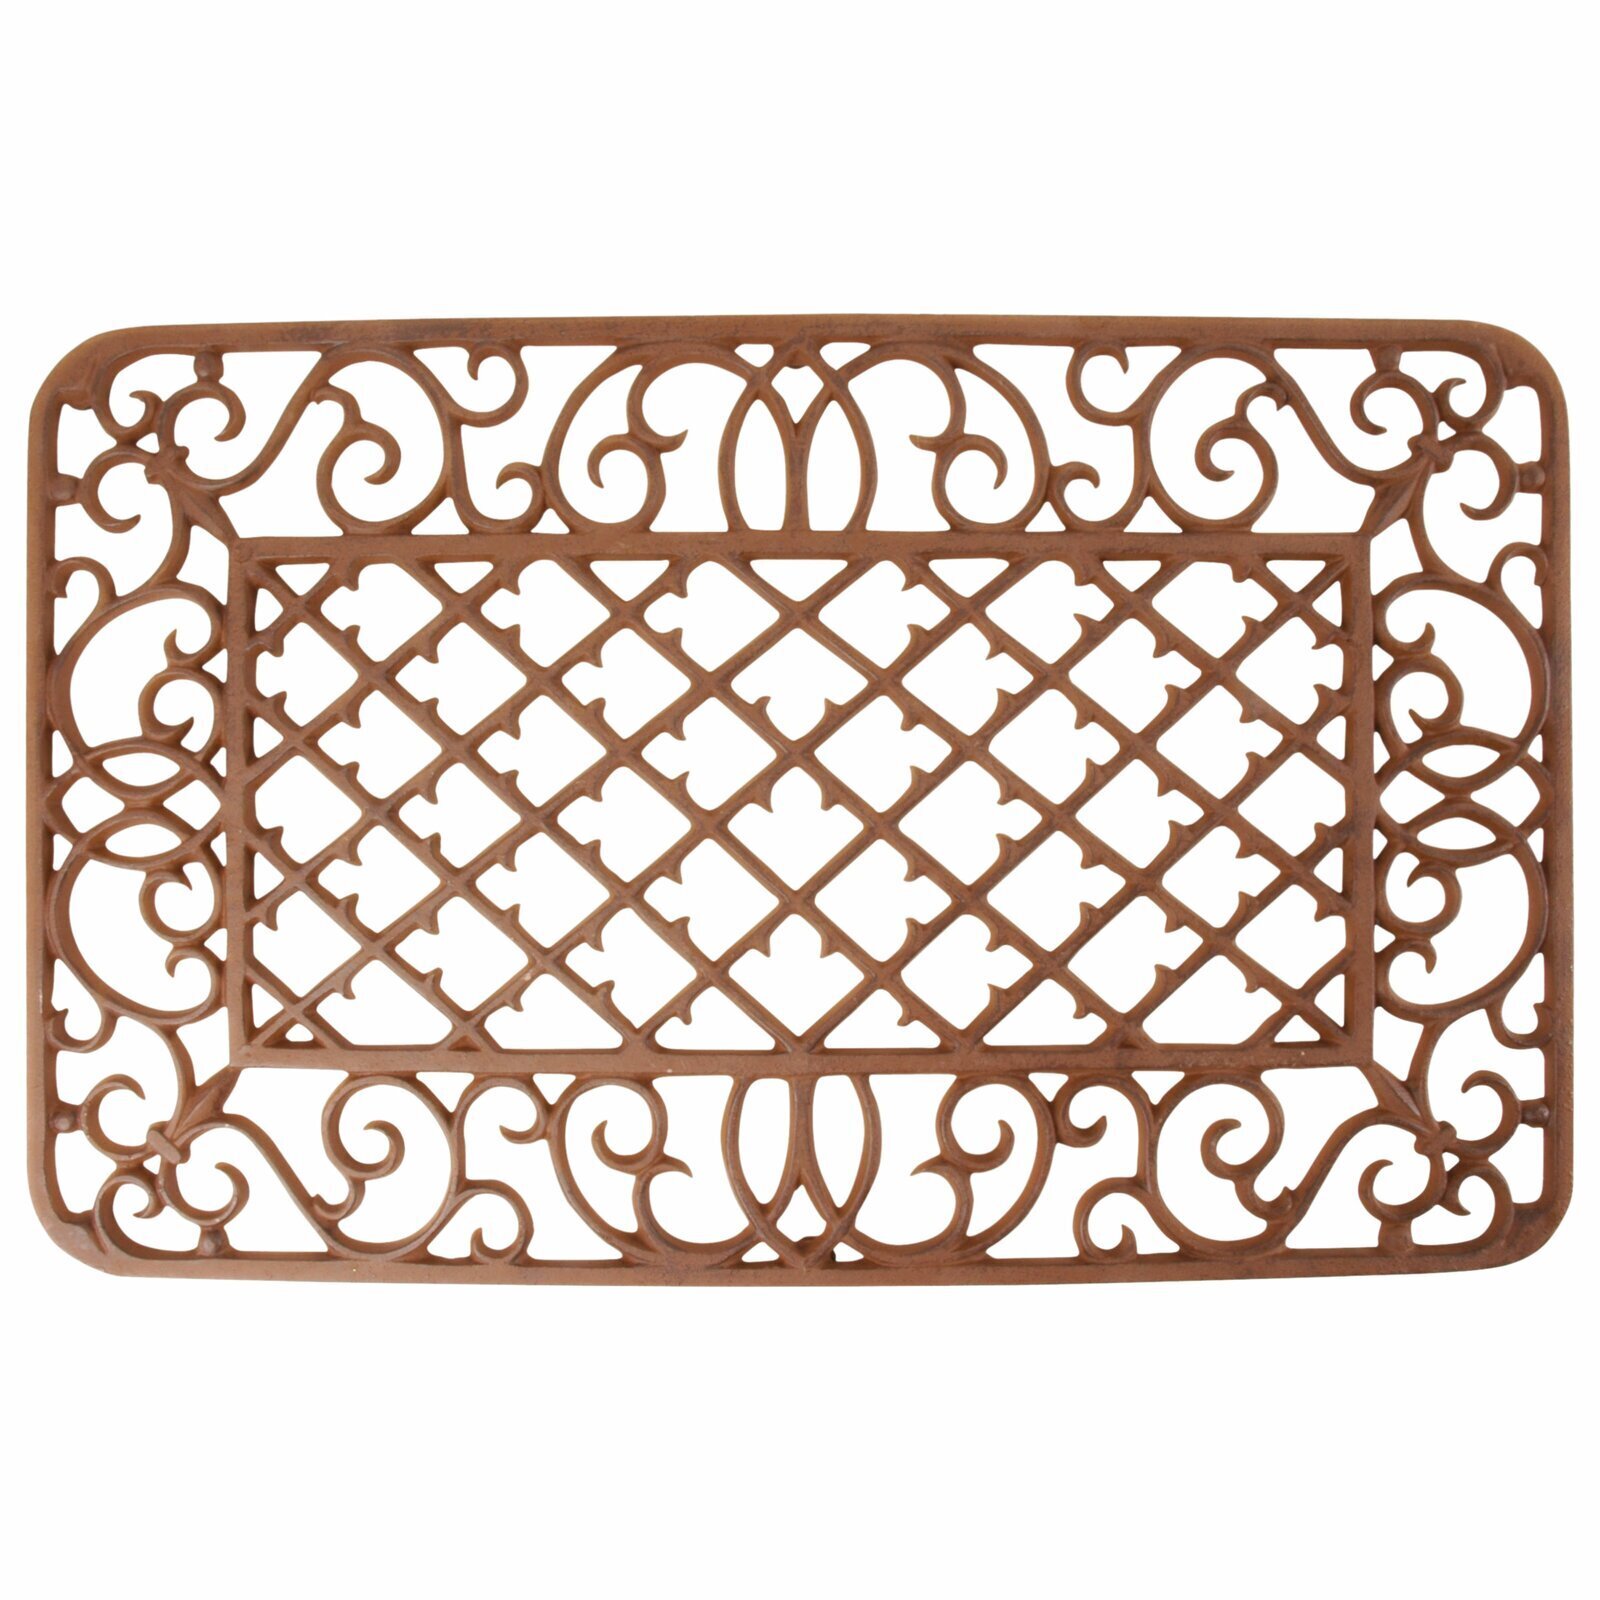 Cast iron door mat in a brown finish